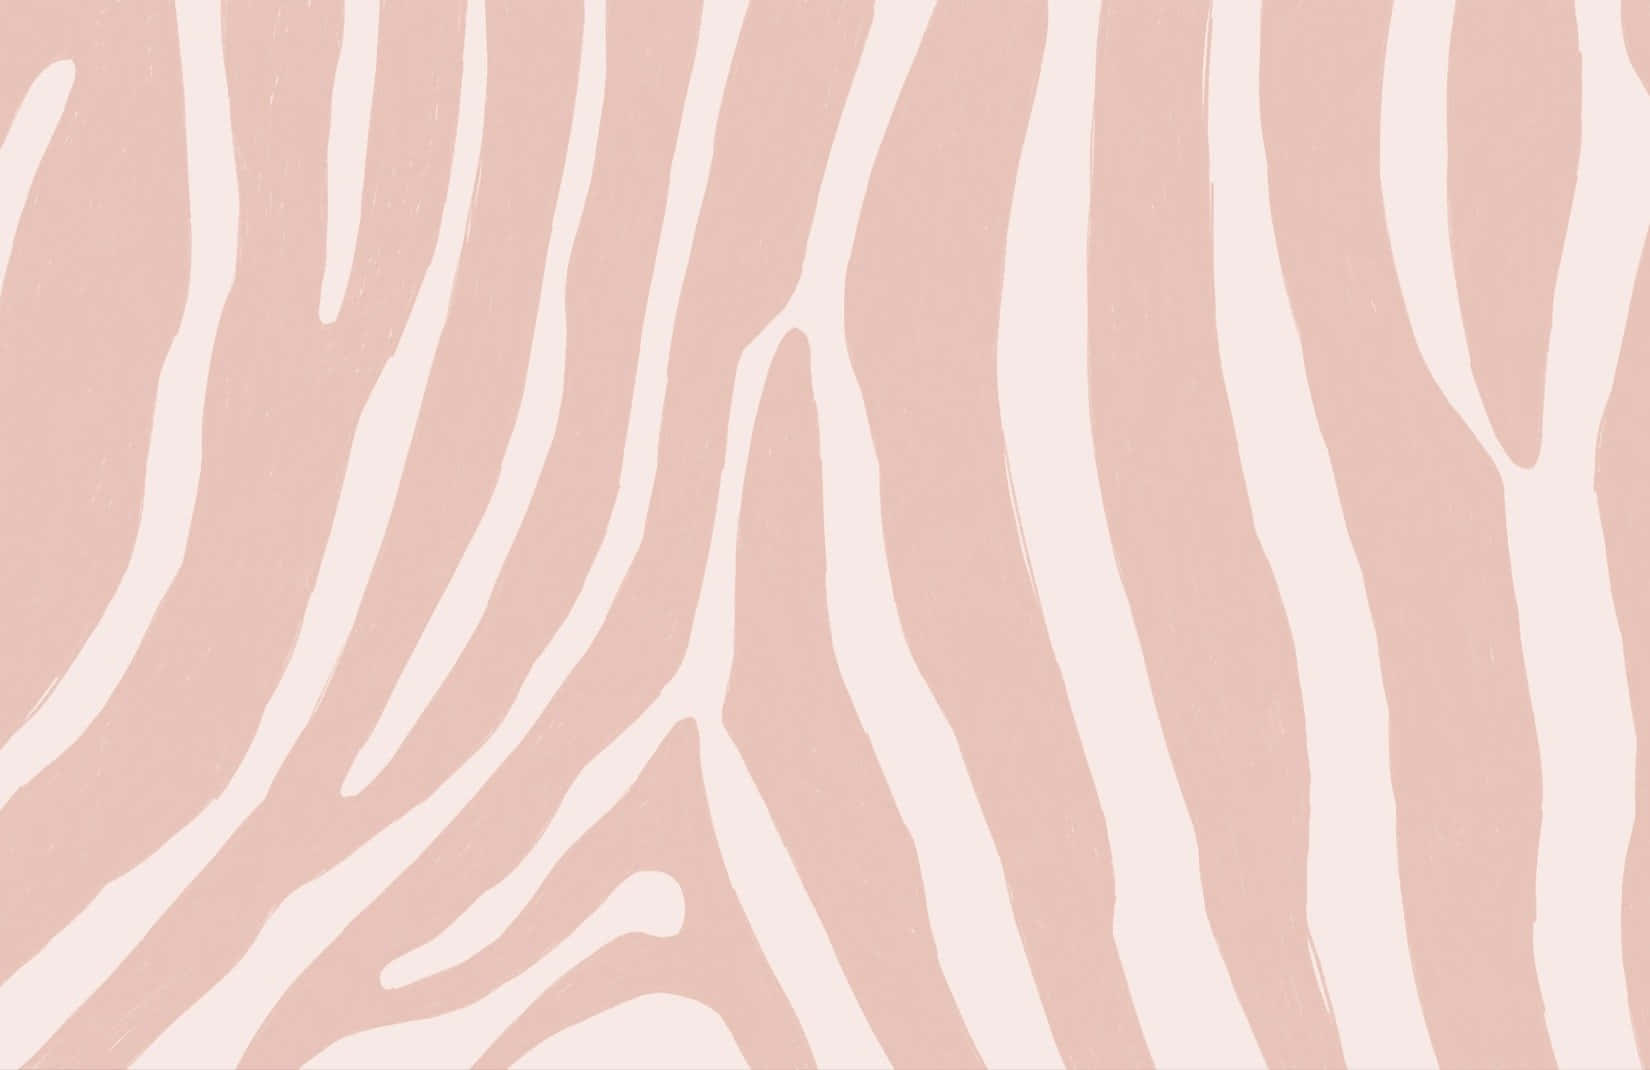 Sweet Dreams Of Pink Zebra Stripes